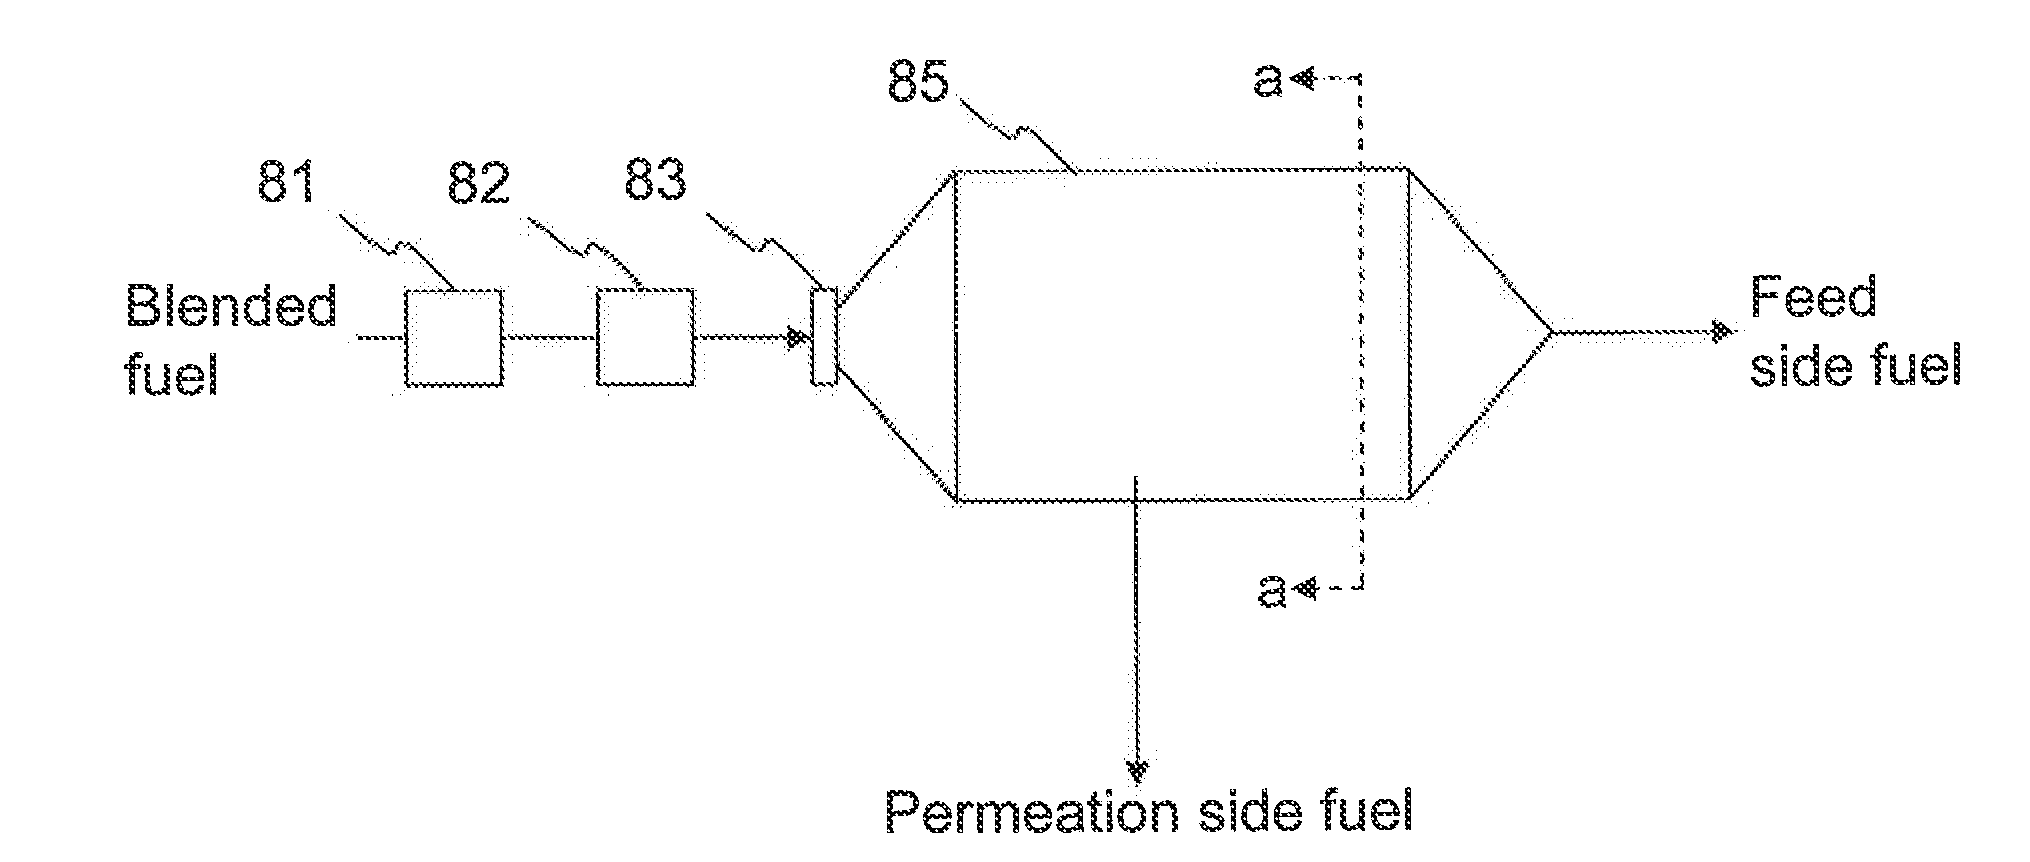 Fuel separation method